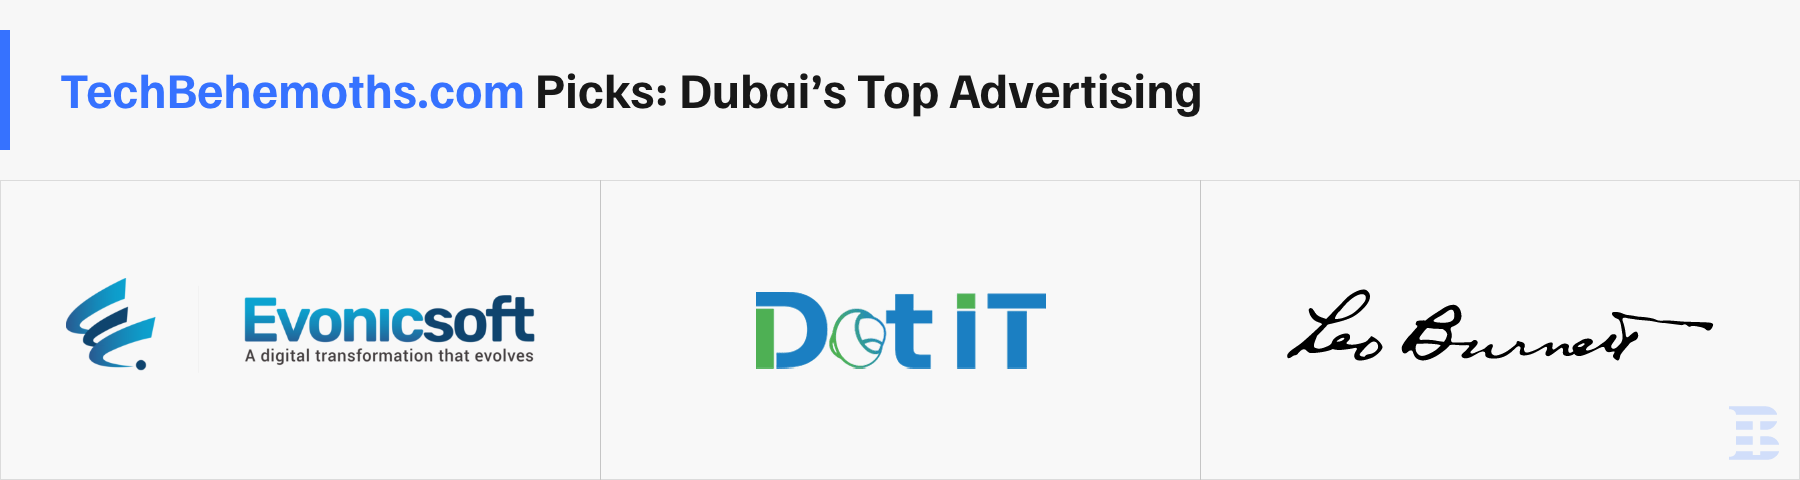 Tecbehemoths picked a list of top advertising agencies in dubai